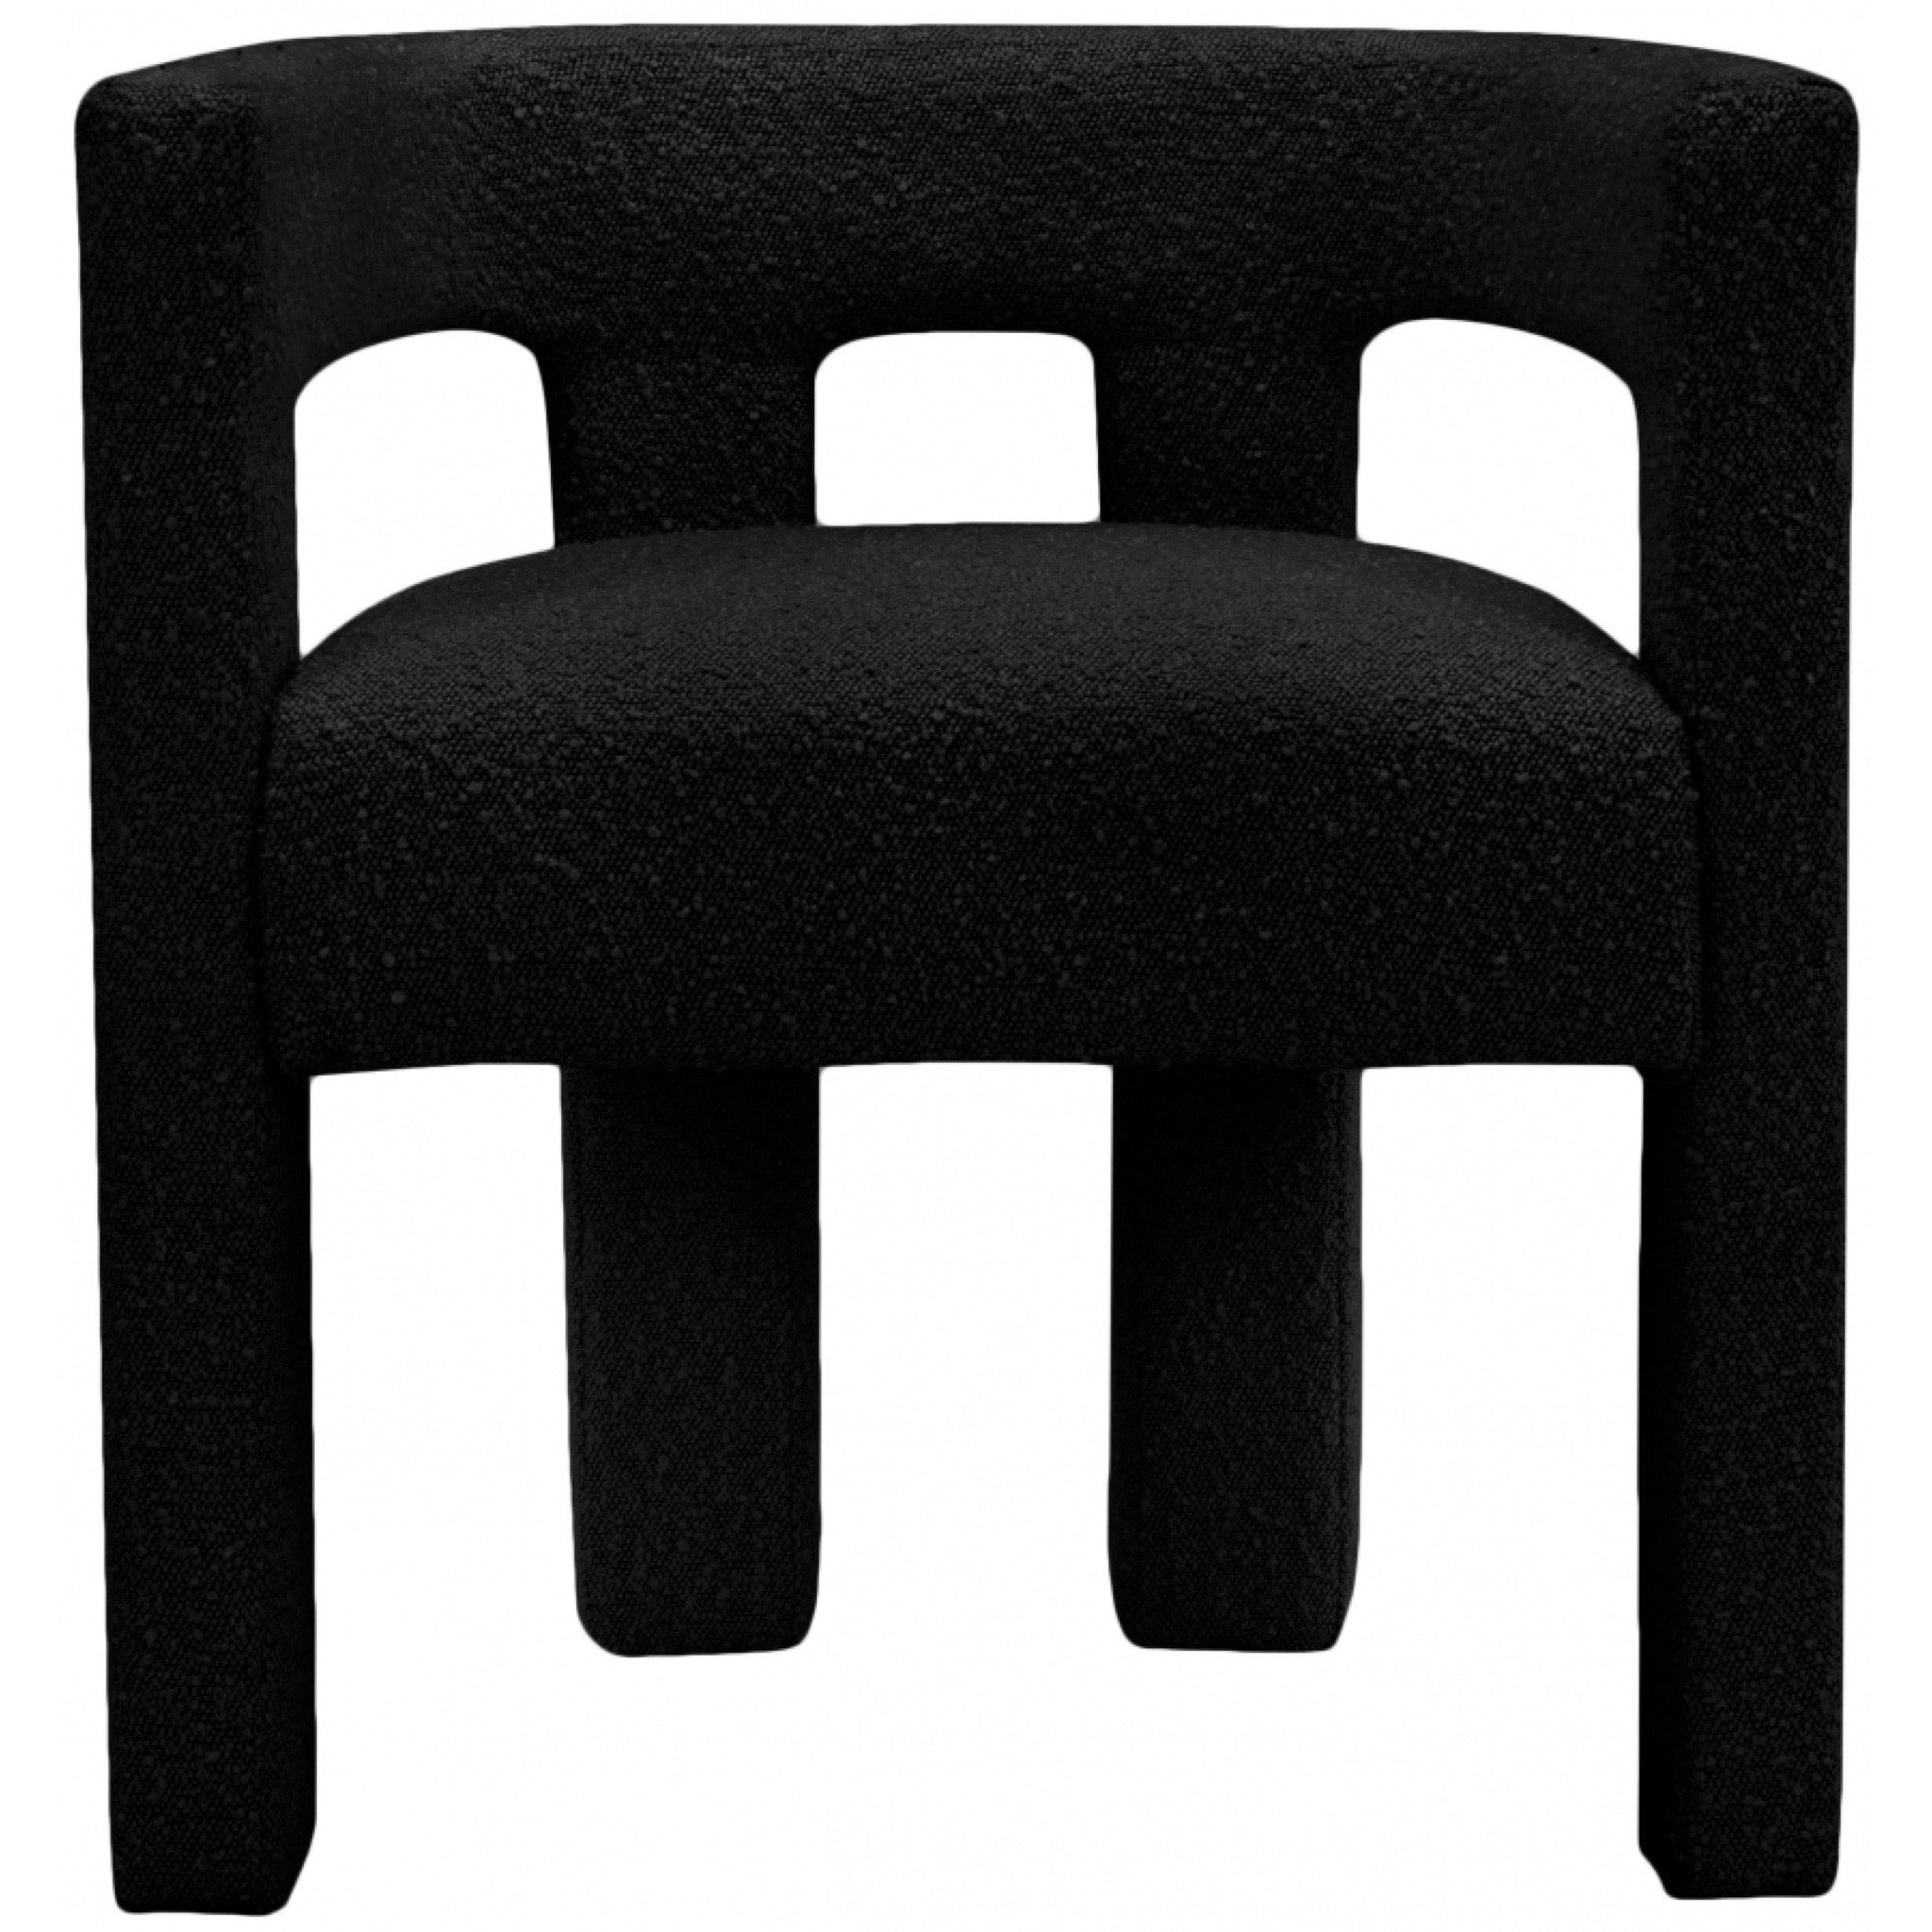 Athena Boucle Fabric Chair - Black